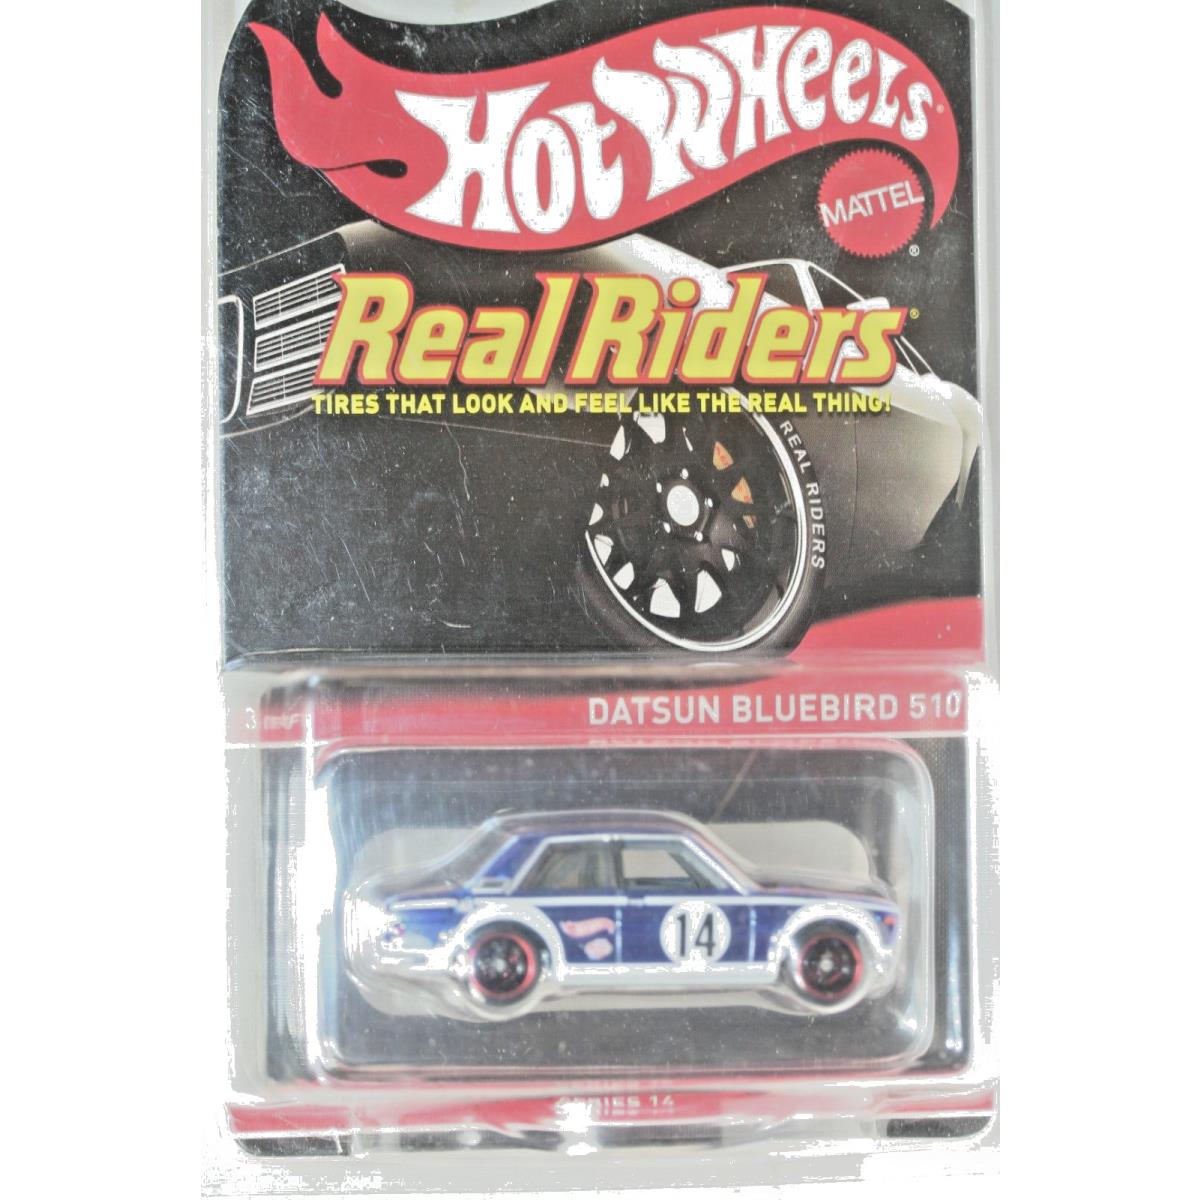 Hot Wheels Rlc Datsun Bluebird 510 Real Riders Series 14 04874/07000